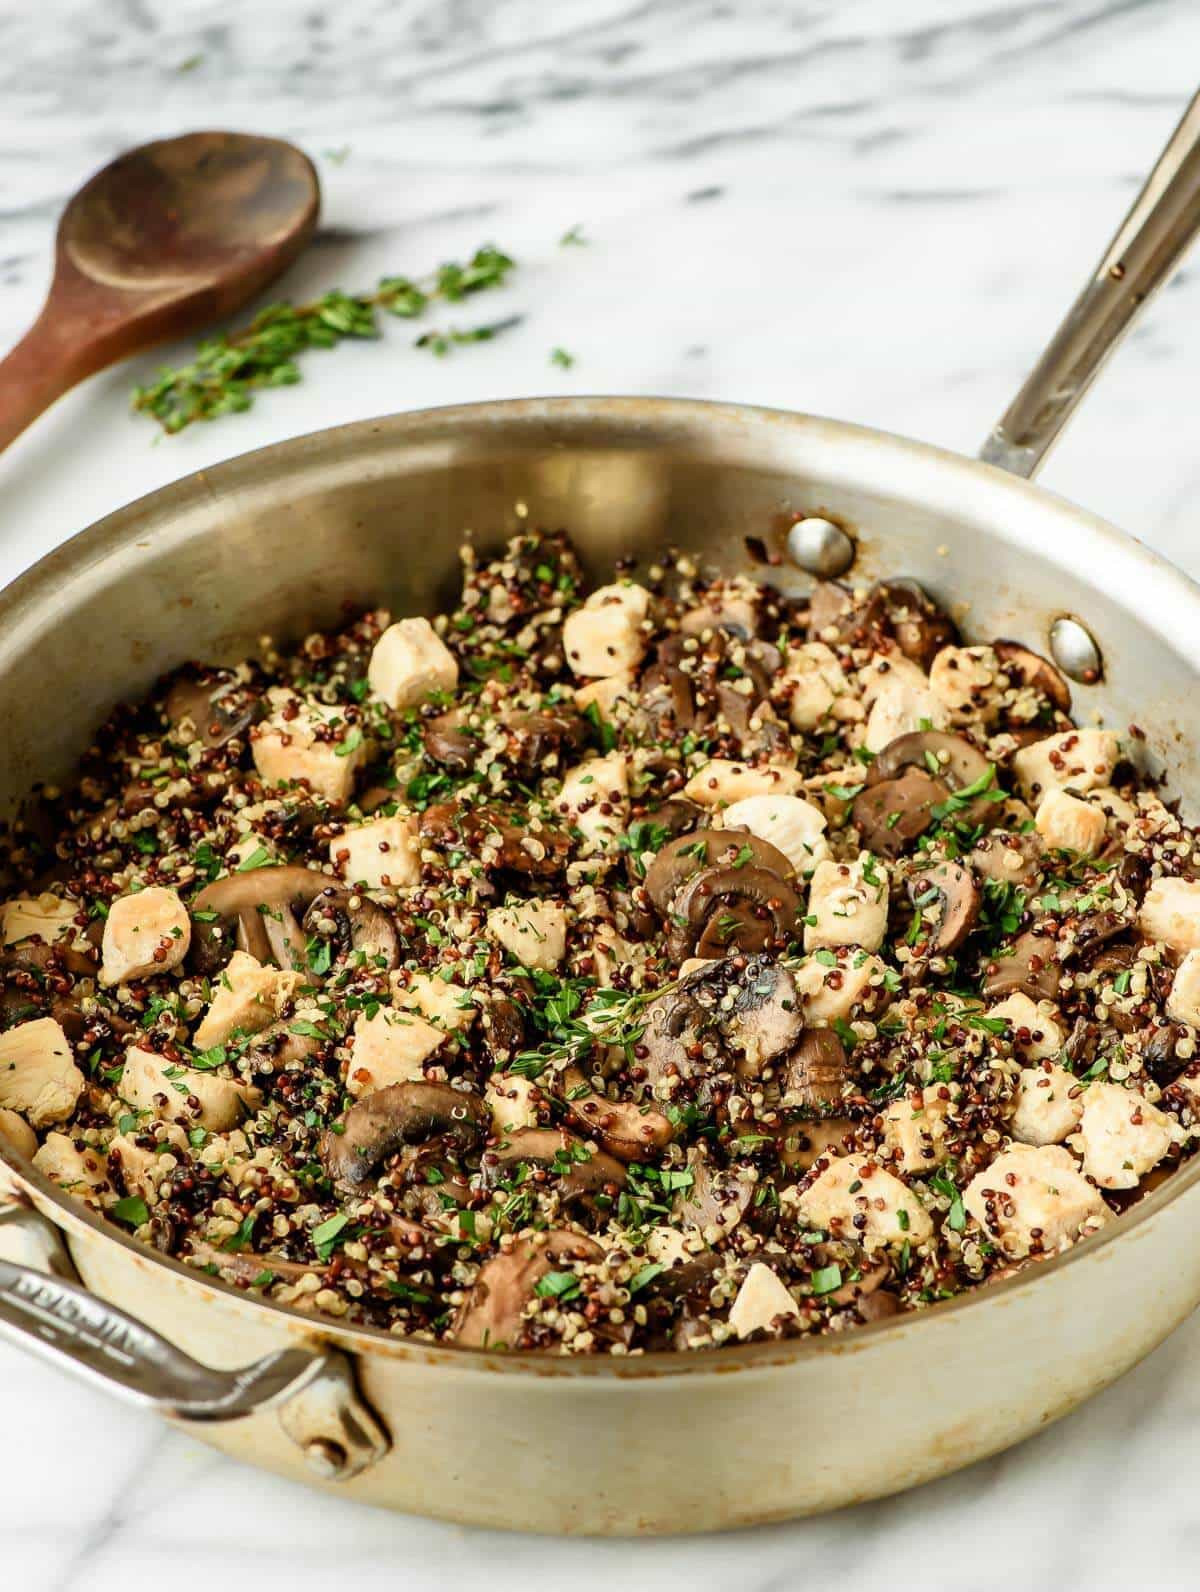 Chicken and Quinoa Recipe Healthy top 20 Skillet Mushroom Chicken and Quinoa Recipe